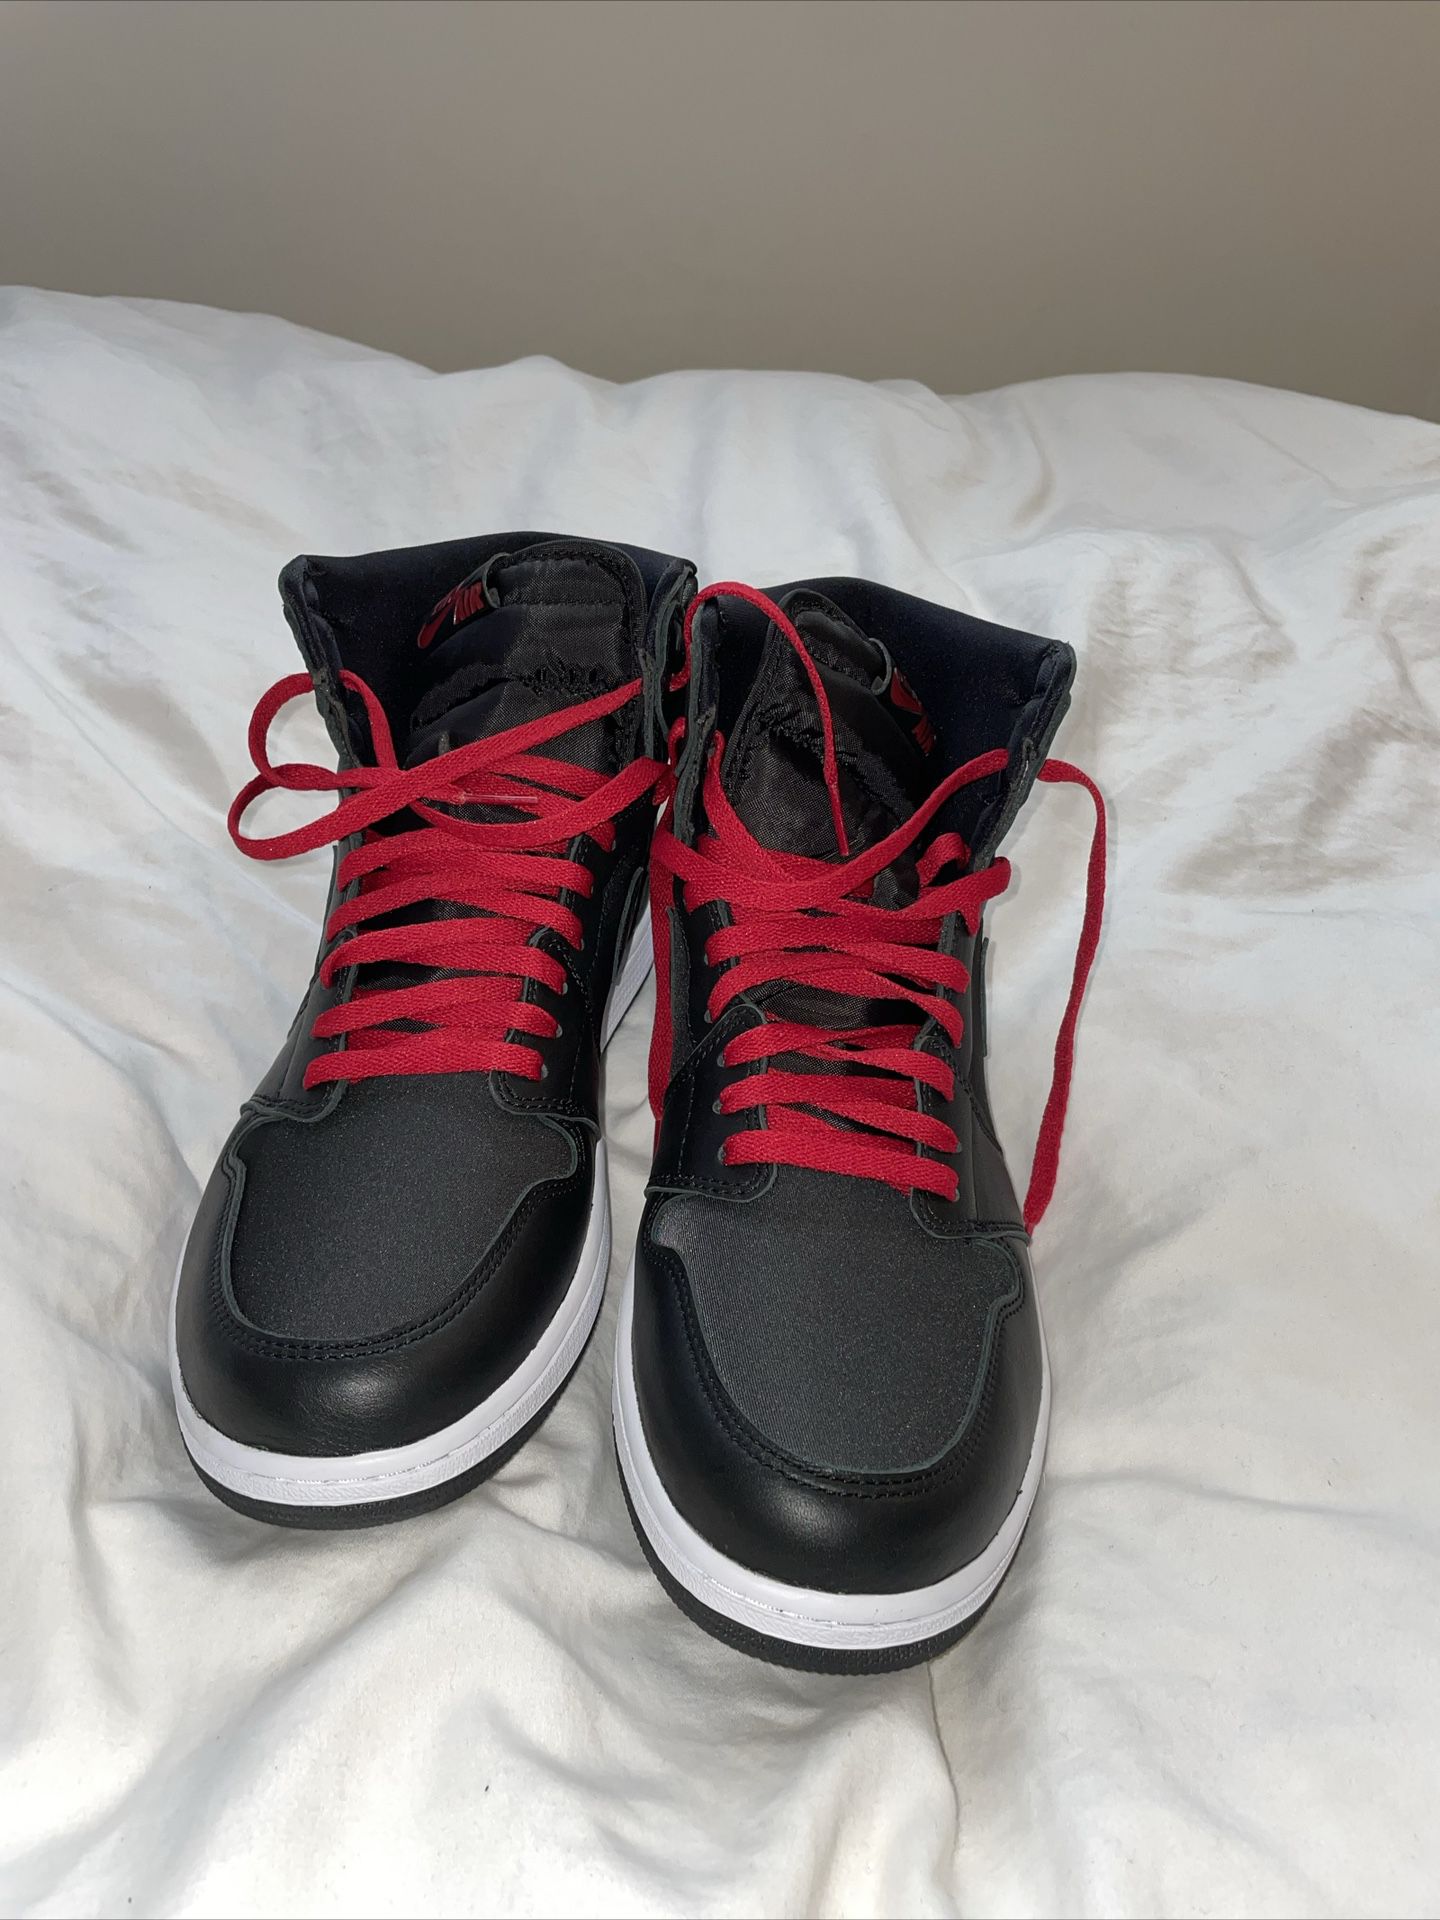 Size 13 - Air Jordan 1 Retro OG High Black Gym Red